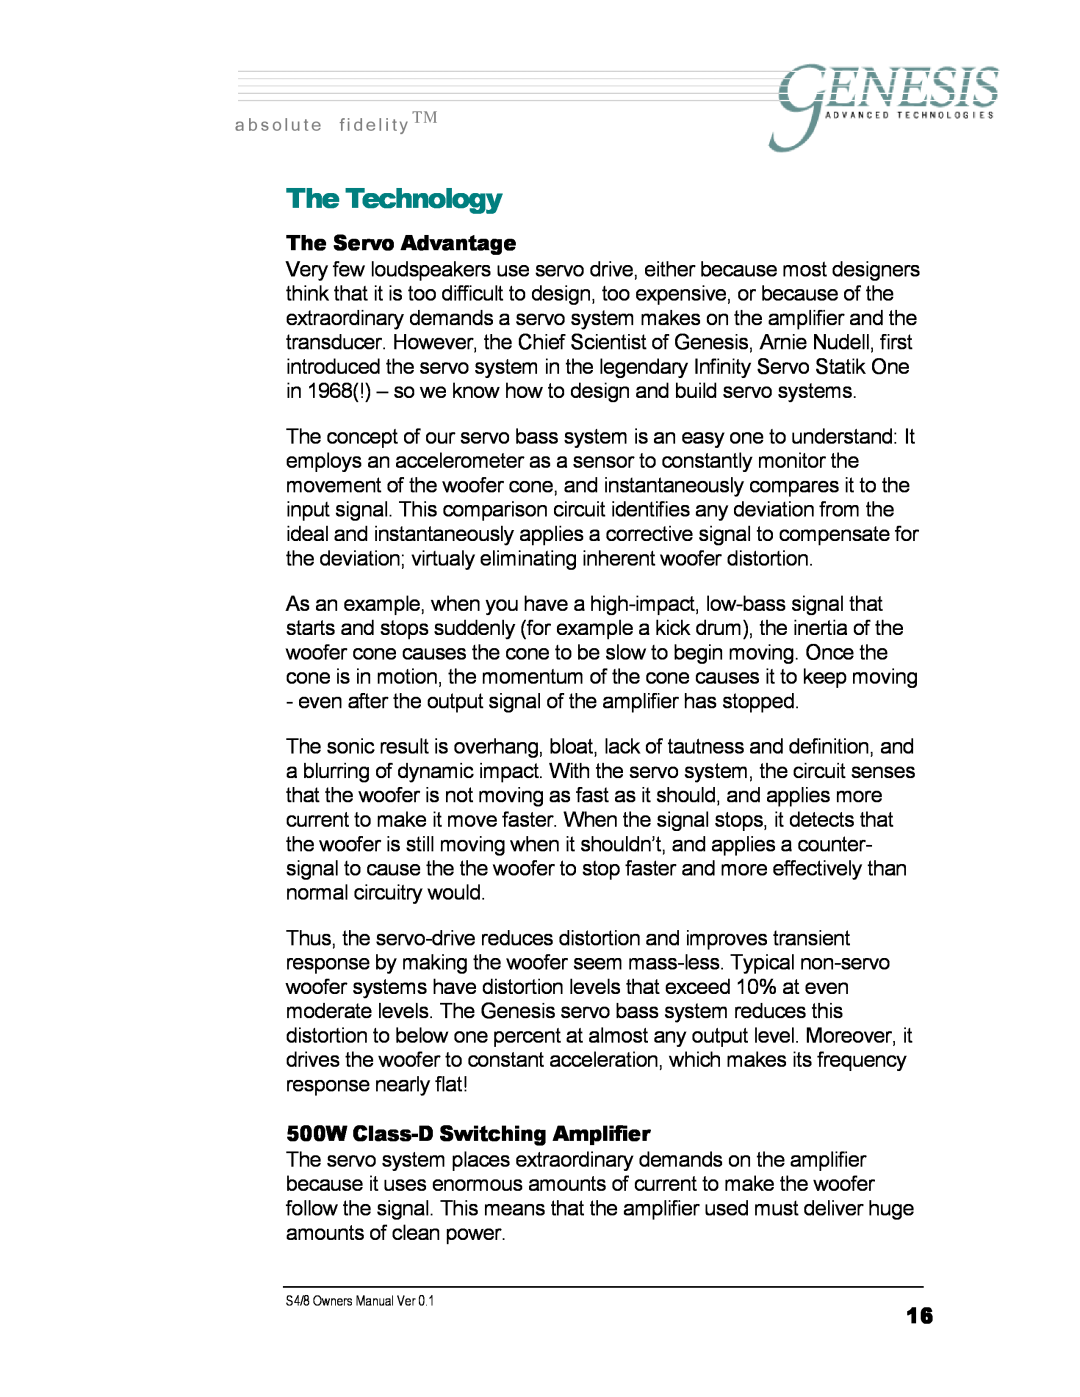 Genesis Advanced Technologies S4/8 owner manual The Technology, a b s o l u t e f i d e l i t y 